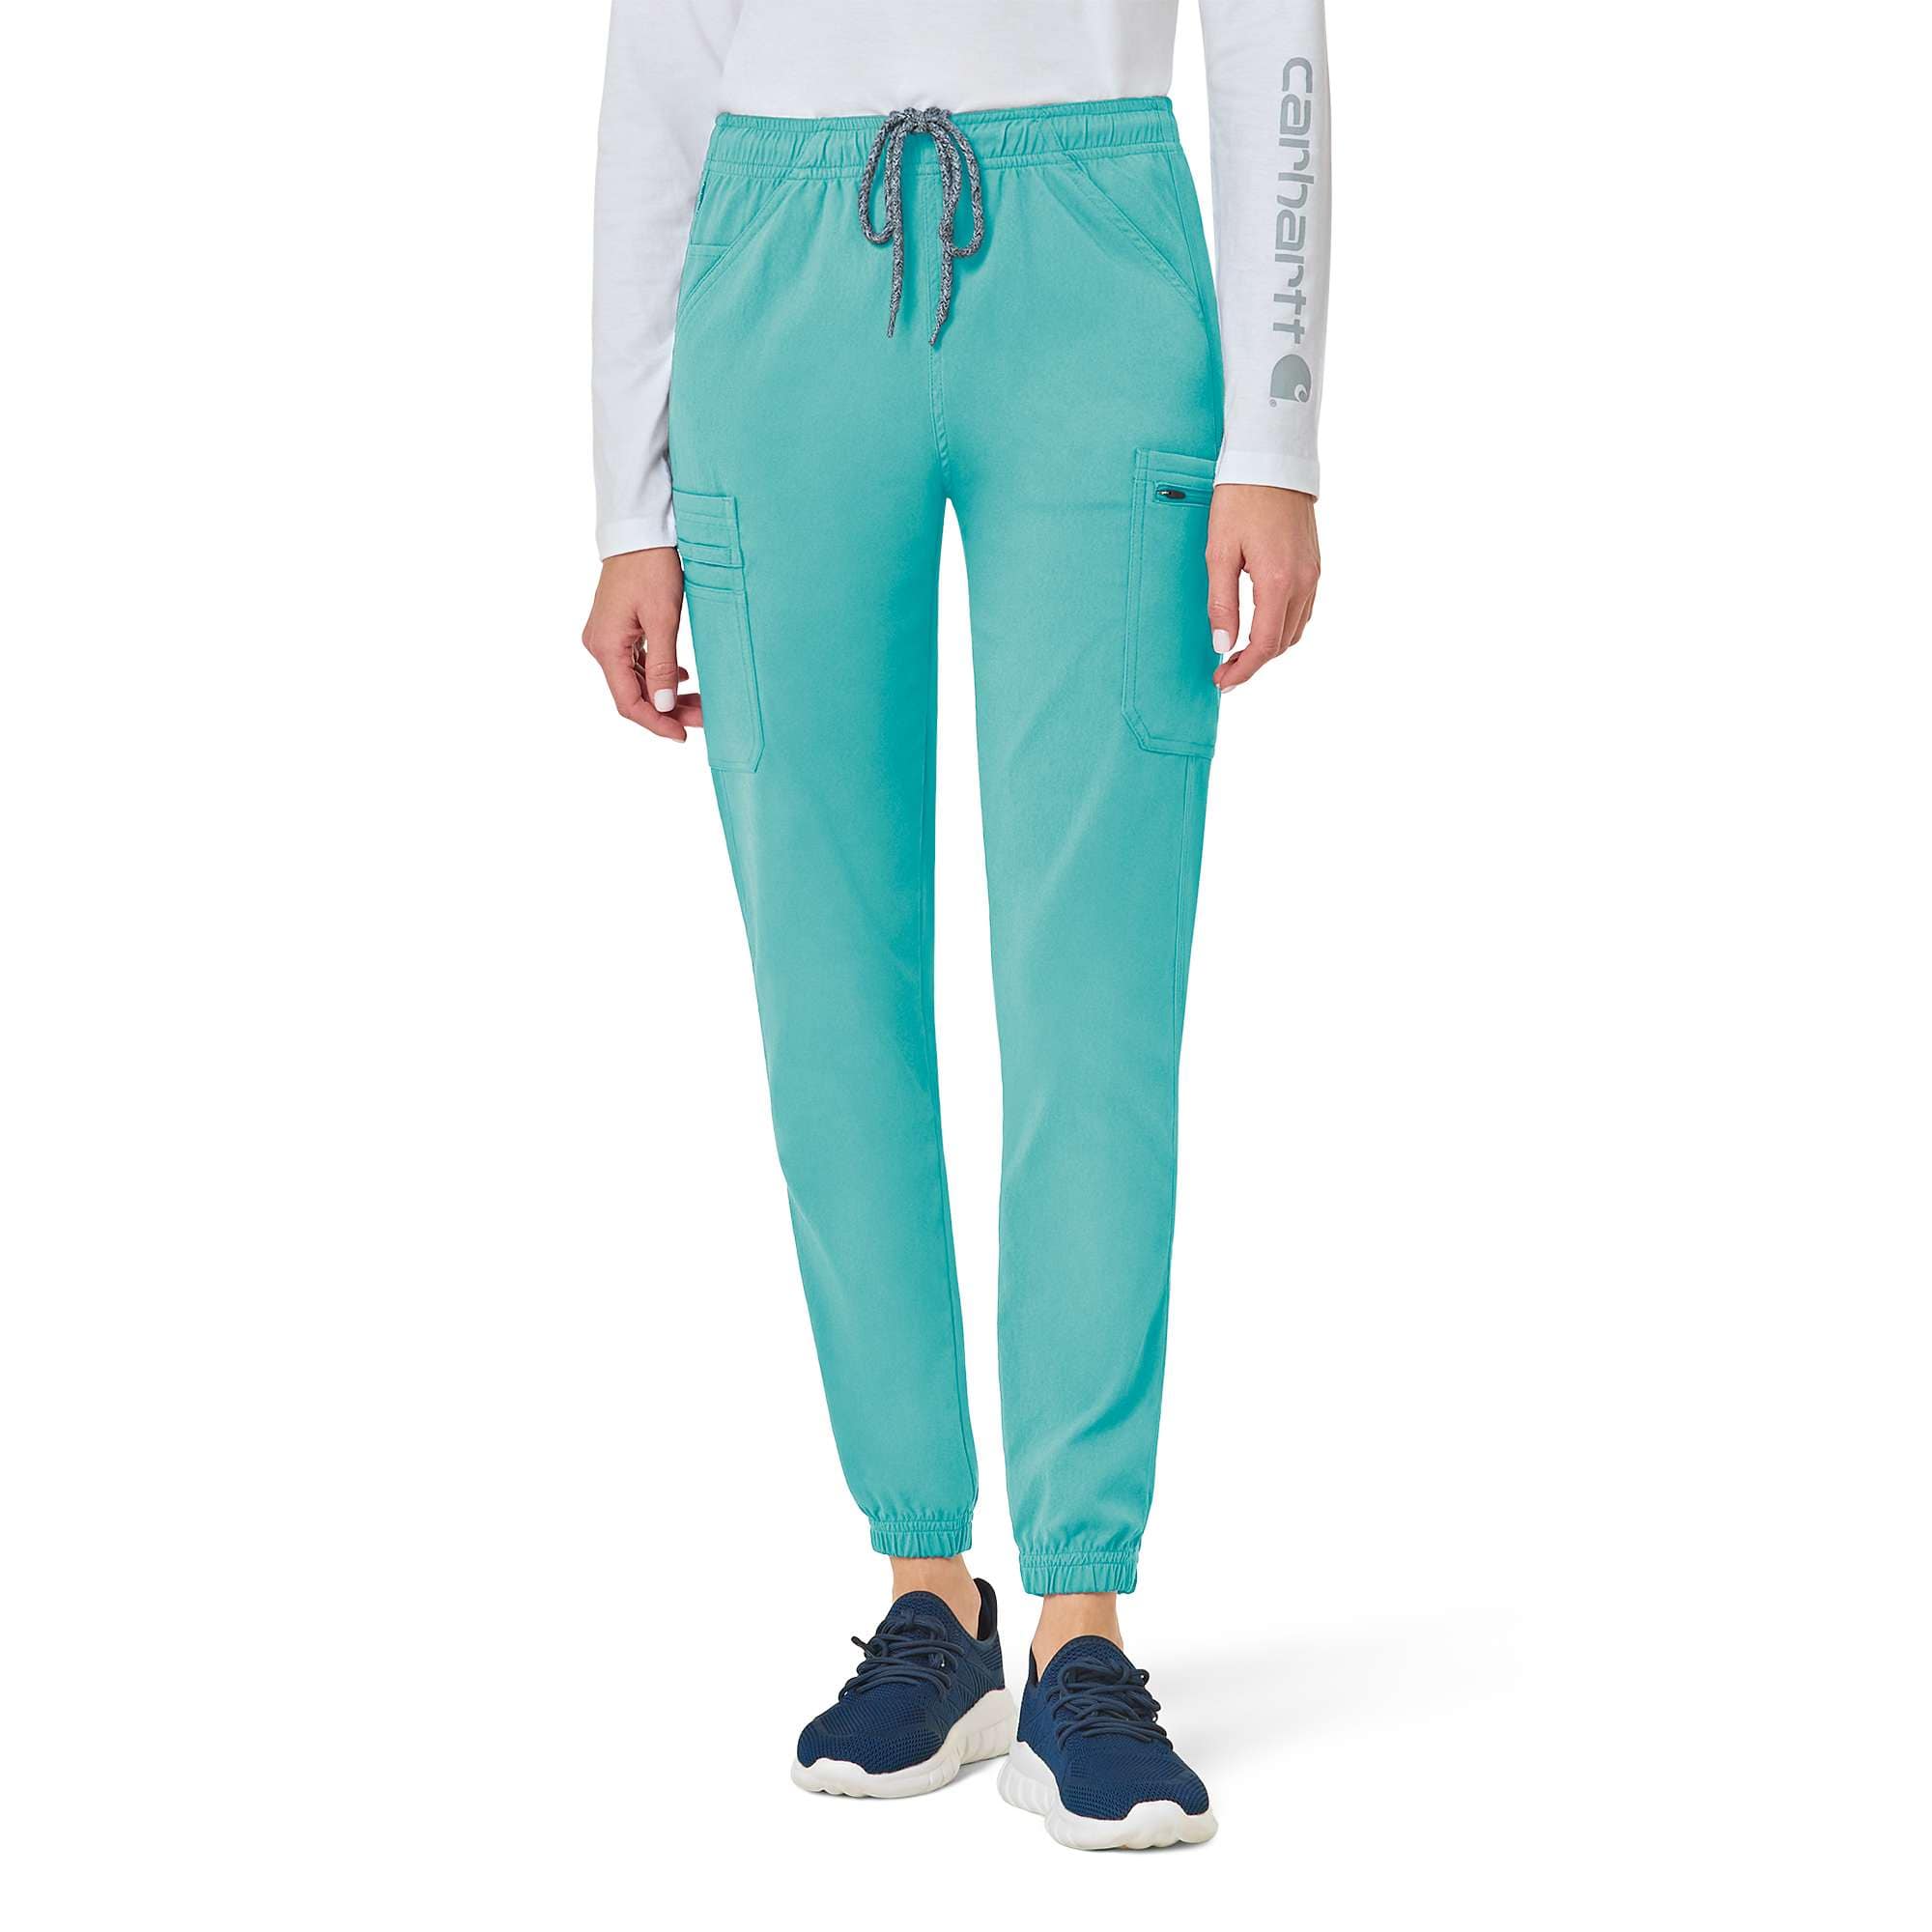 M MAROAUT Cargo Pants for Women Joggers with Pockets Lightweight Hiking  Sweatpants Scrub Gray 